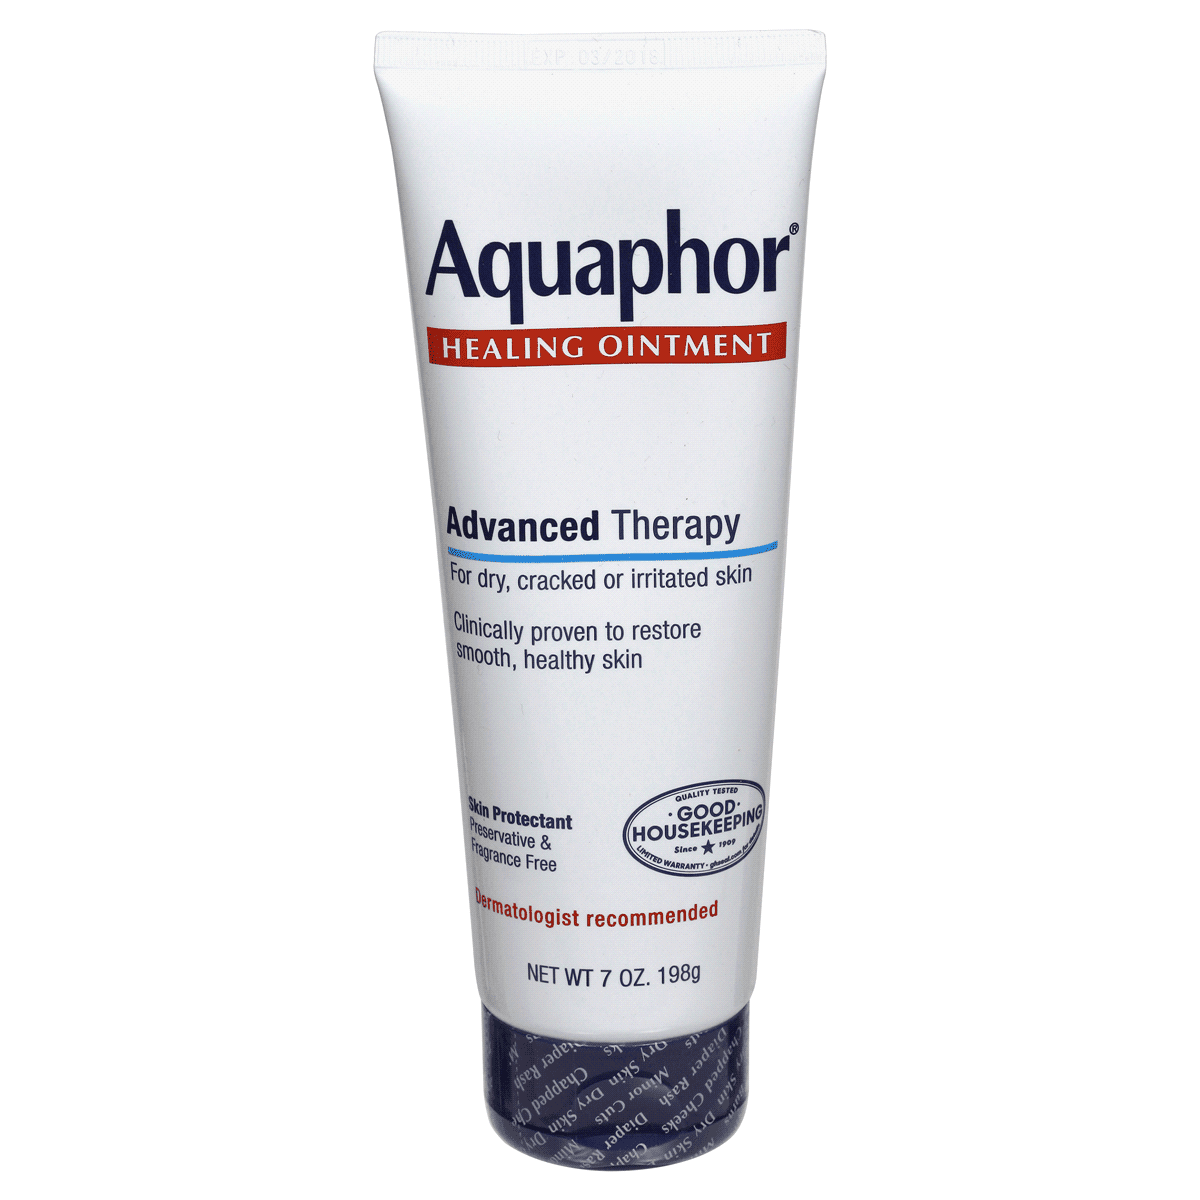 Aquaphor salve